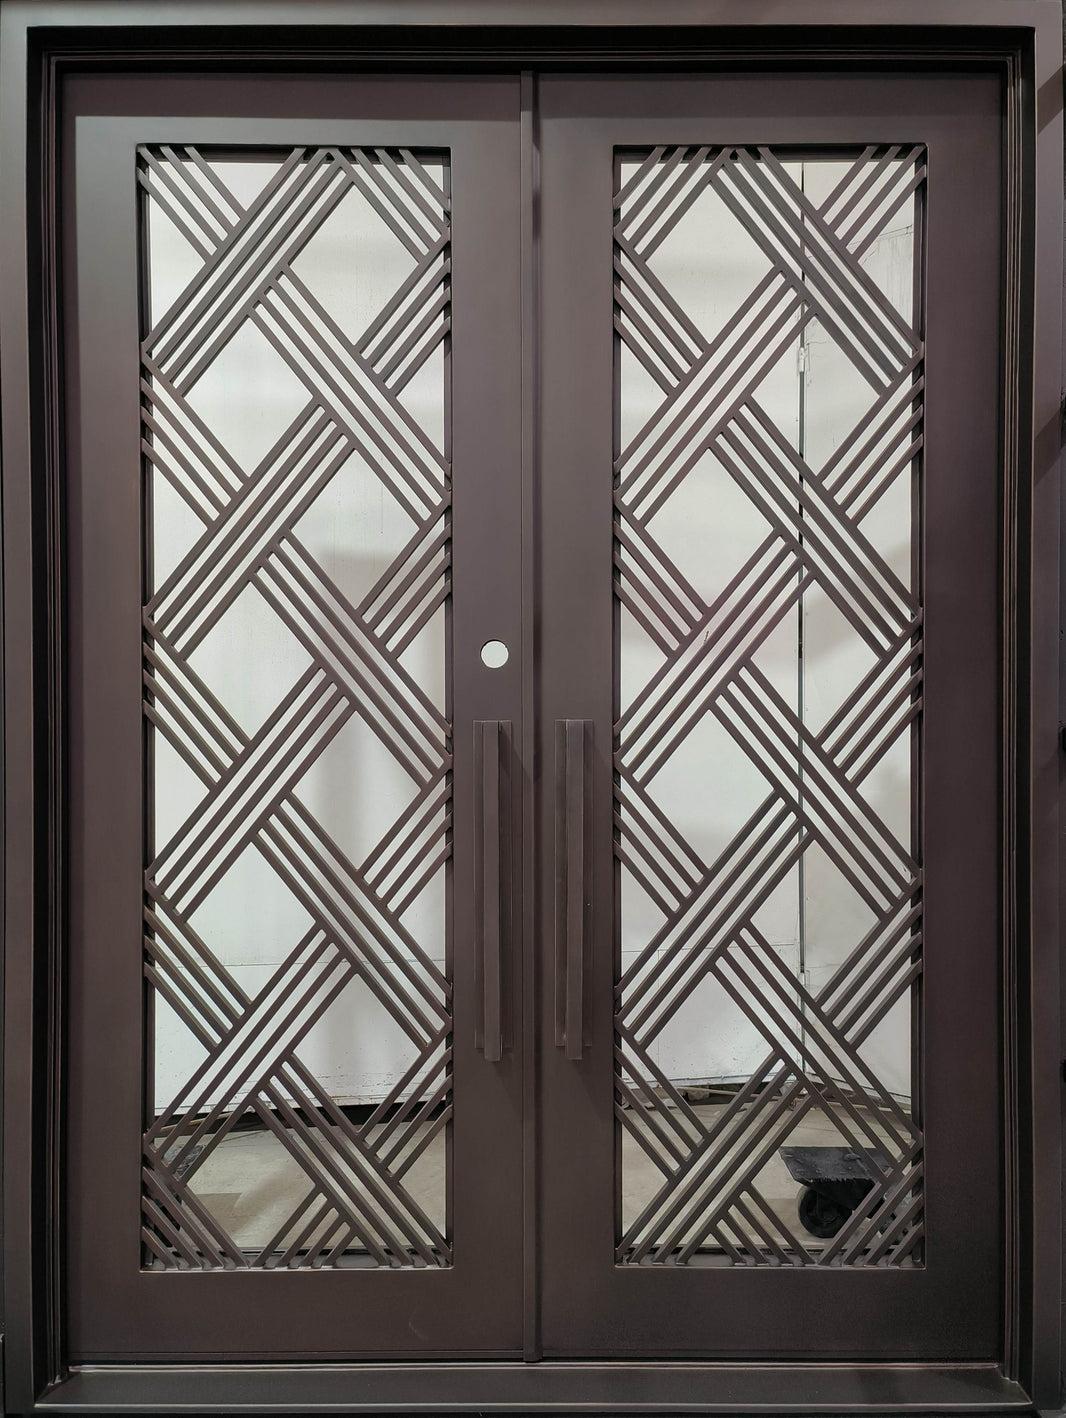 Cross Strap Design Iron Door | Square Top With kickplate | Model # IWD 1044